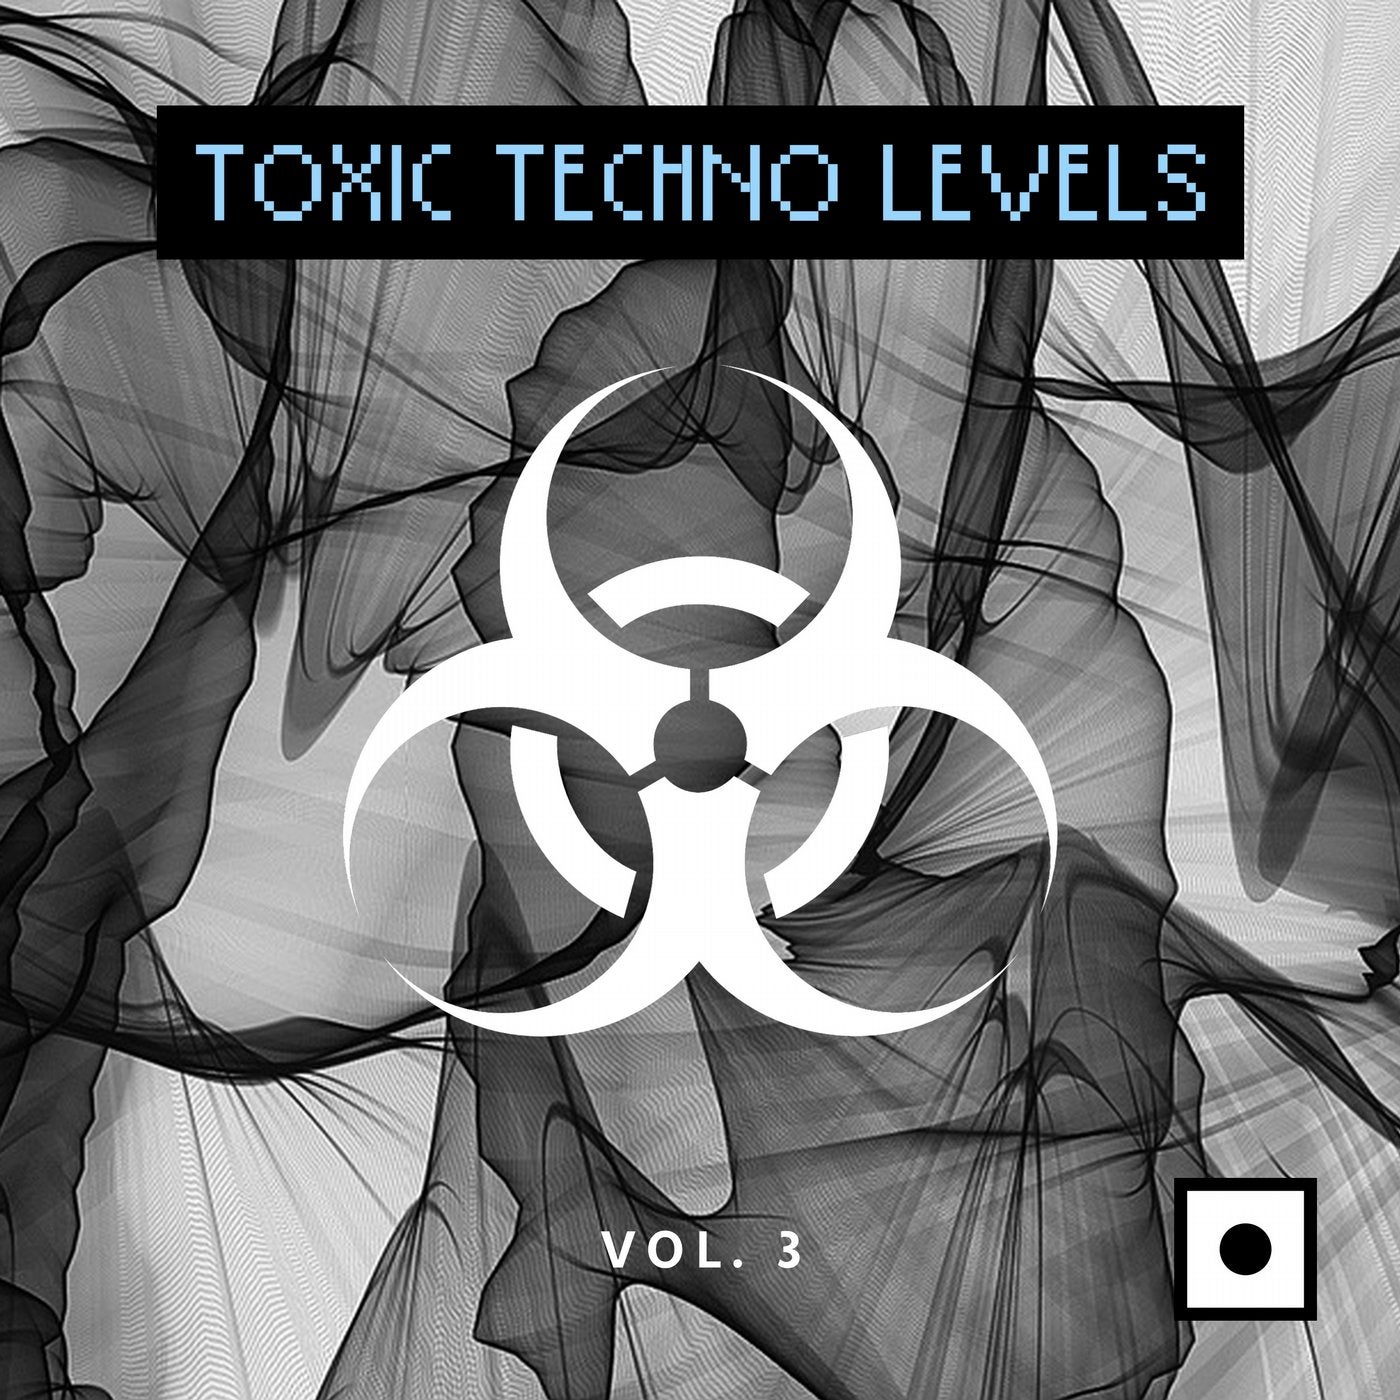 Toxic Techno Levels, Vol. 3